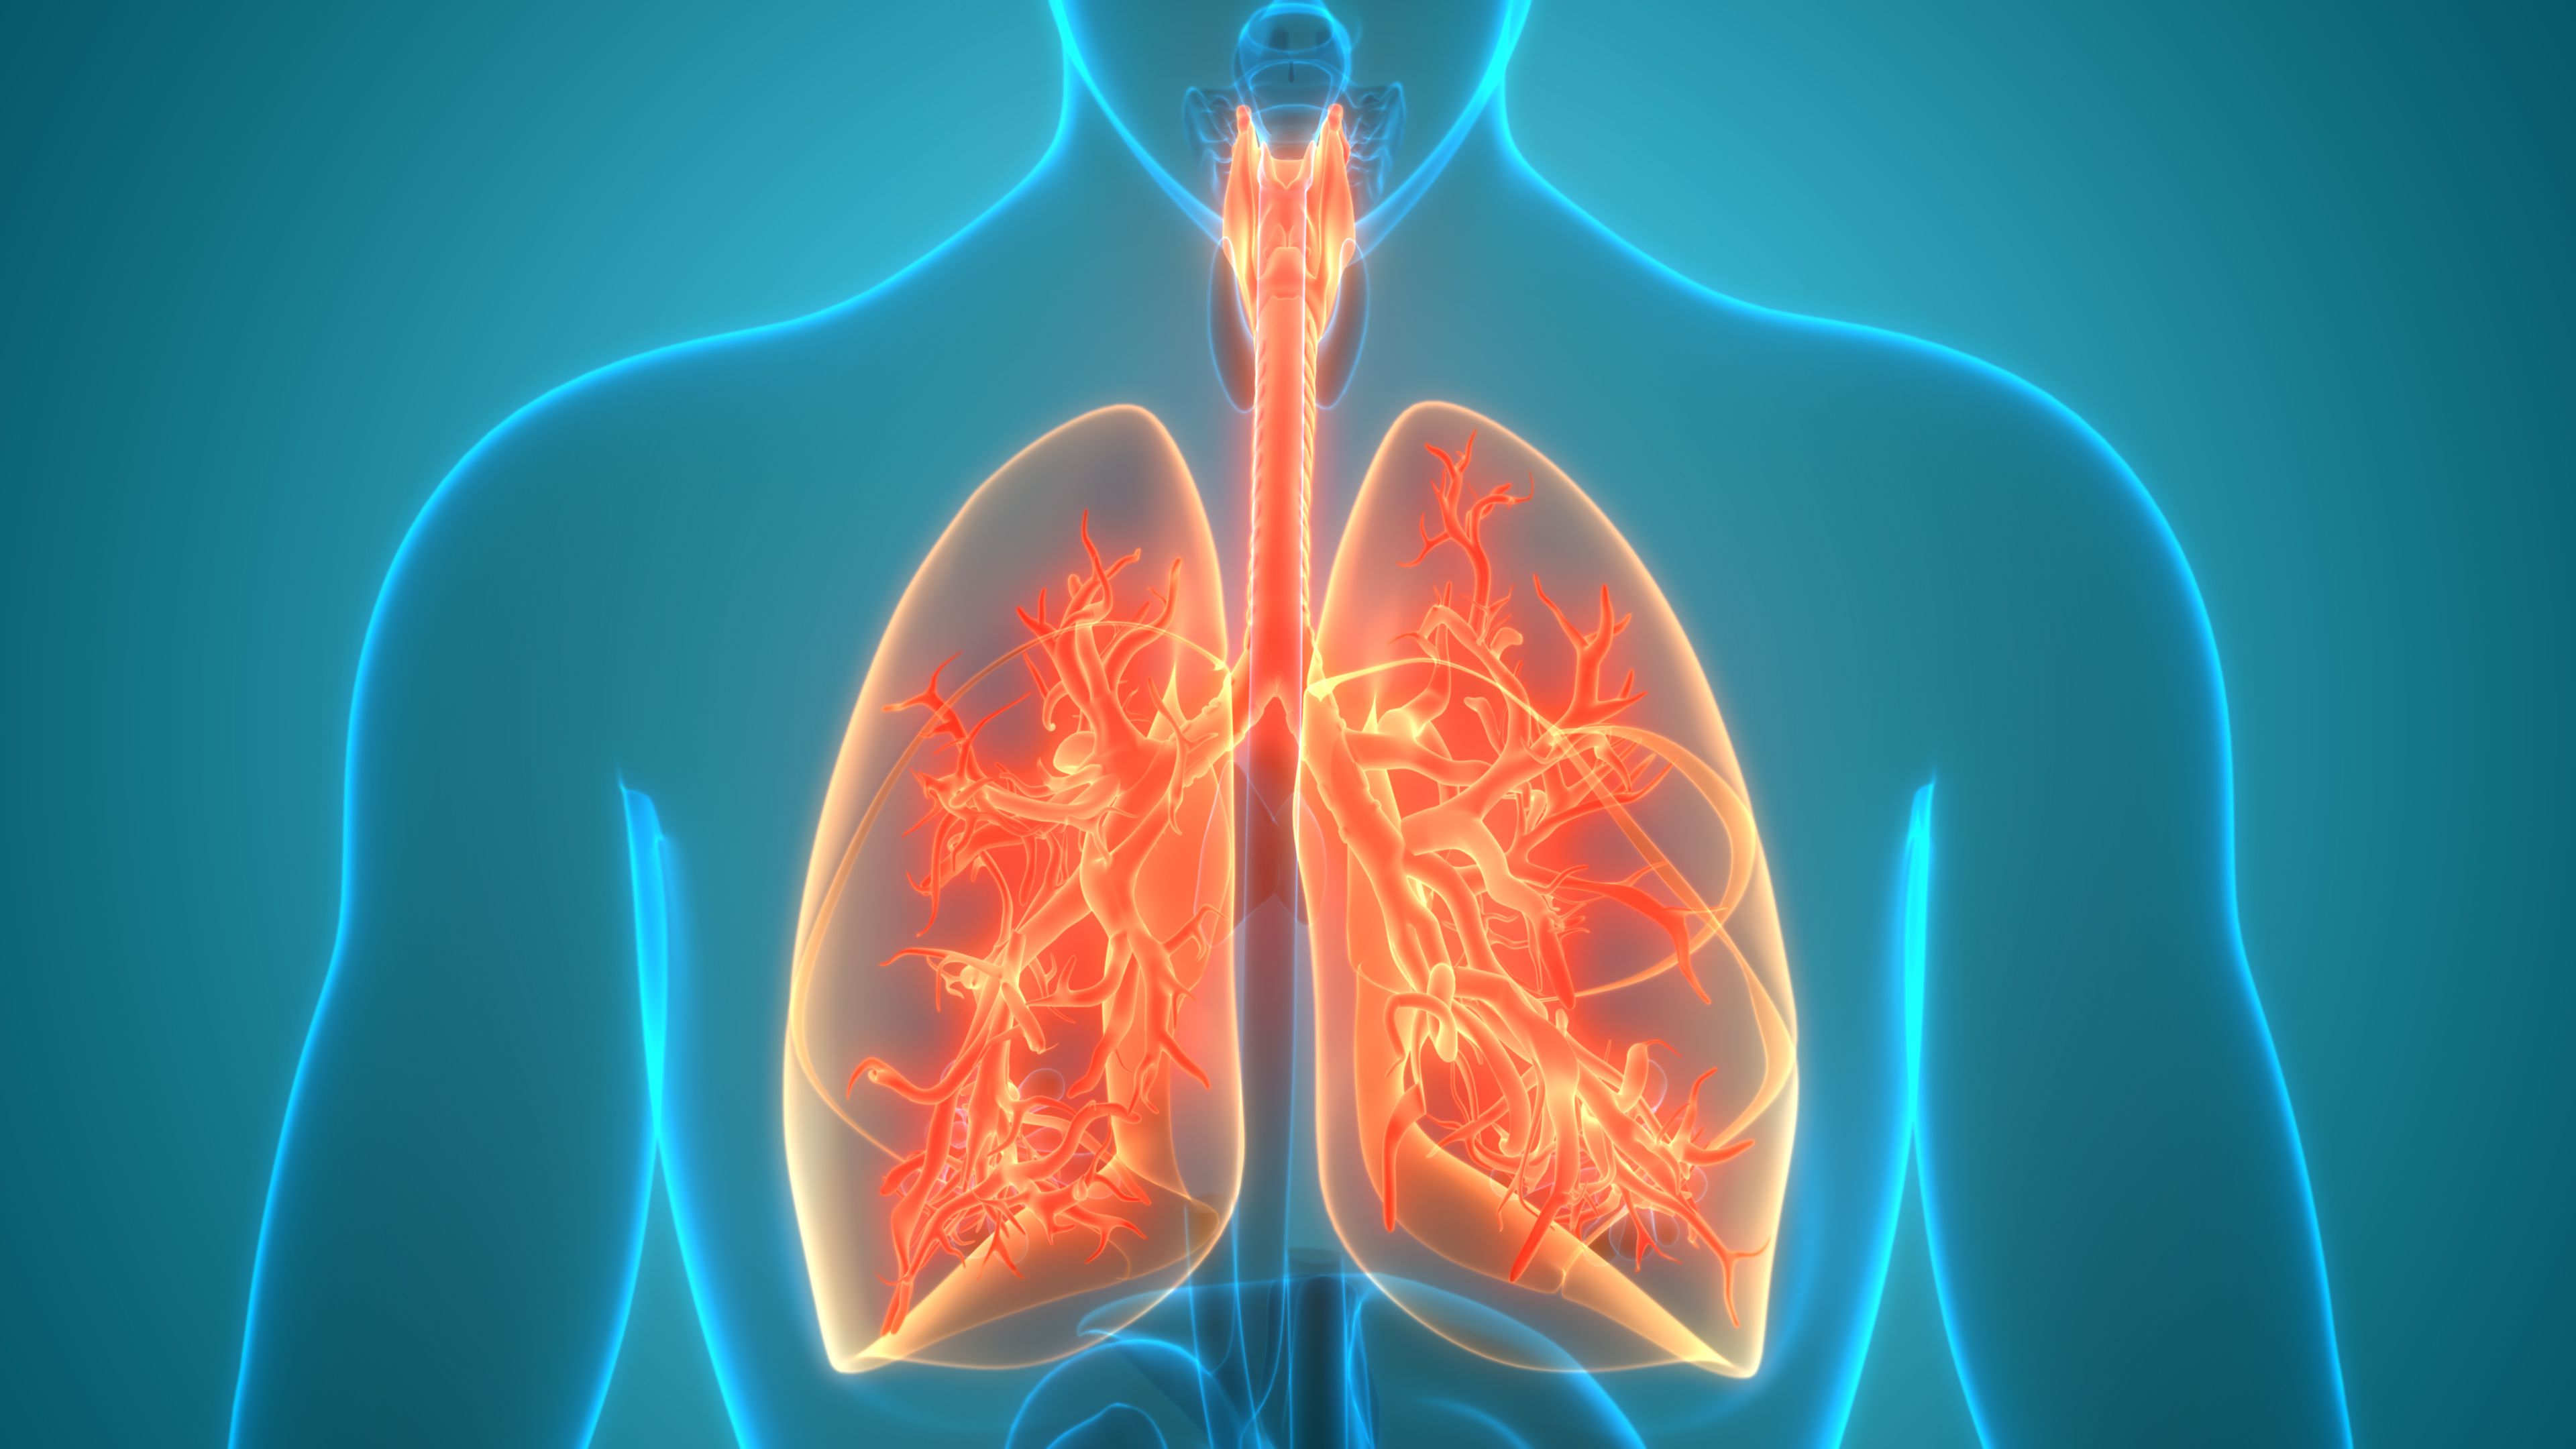 human-respiratory-system-lungs-anatomy-1226884277-b922ec7e92054780a6dc2308107f5188